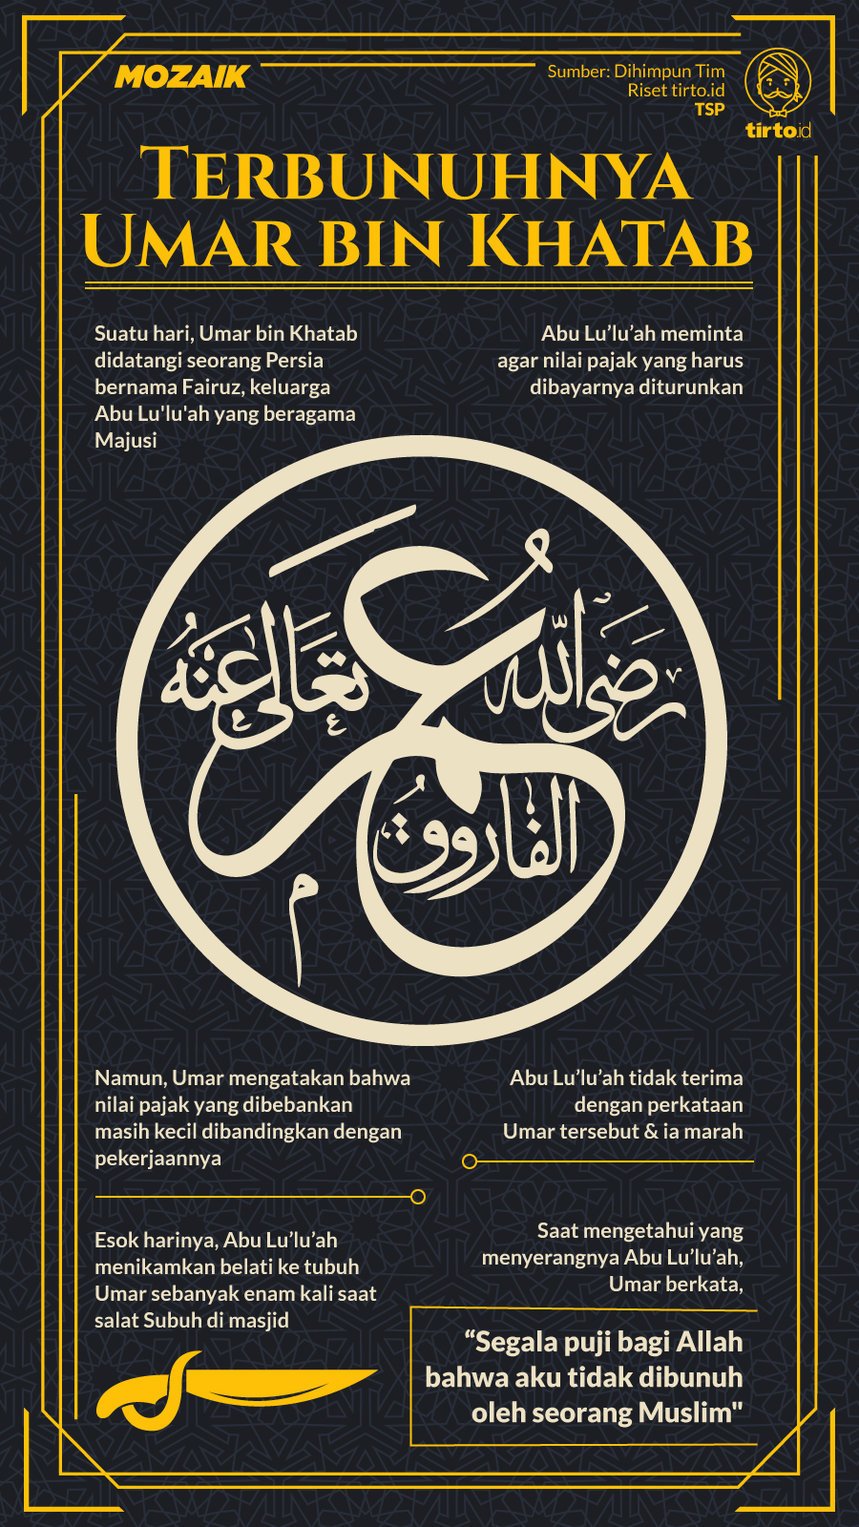 Infografik Mozaik Terbunuhnya Umar Bin Khatab